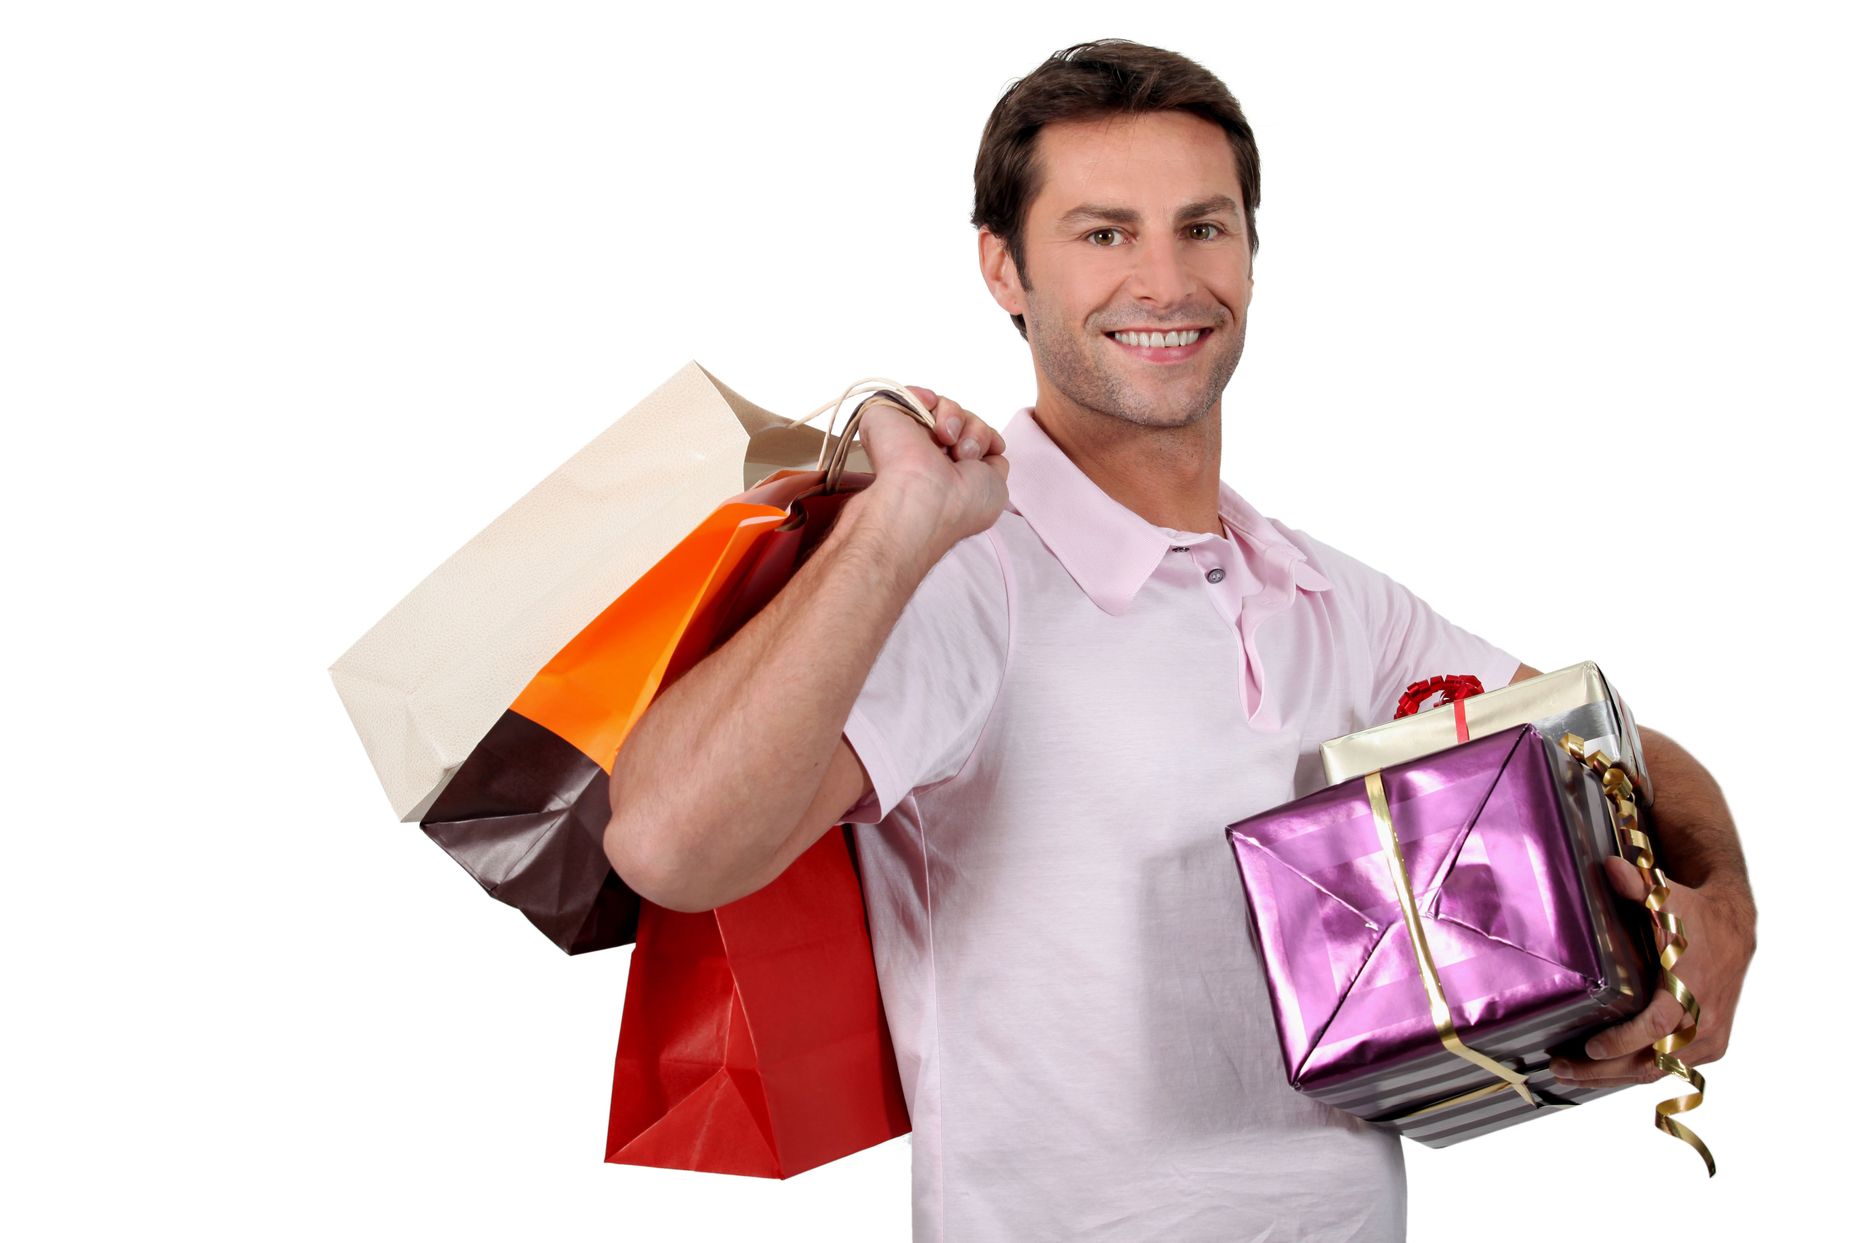 Go shopping presents you. Подарок " мужчине". Мужчина с пакетами. Человек дарит подарок. Мужчина шоппинг.